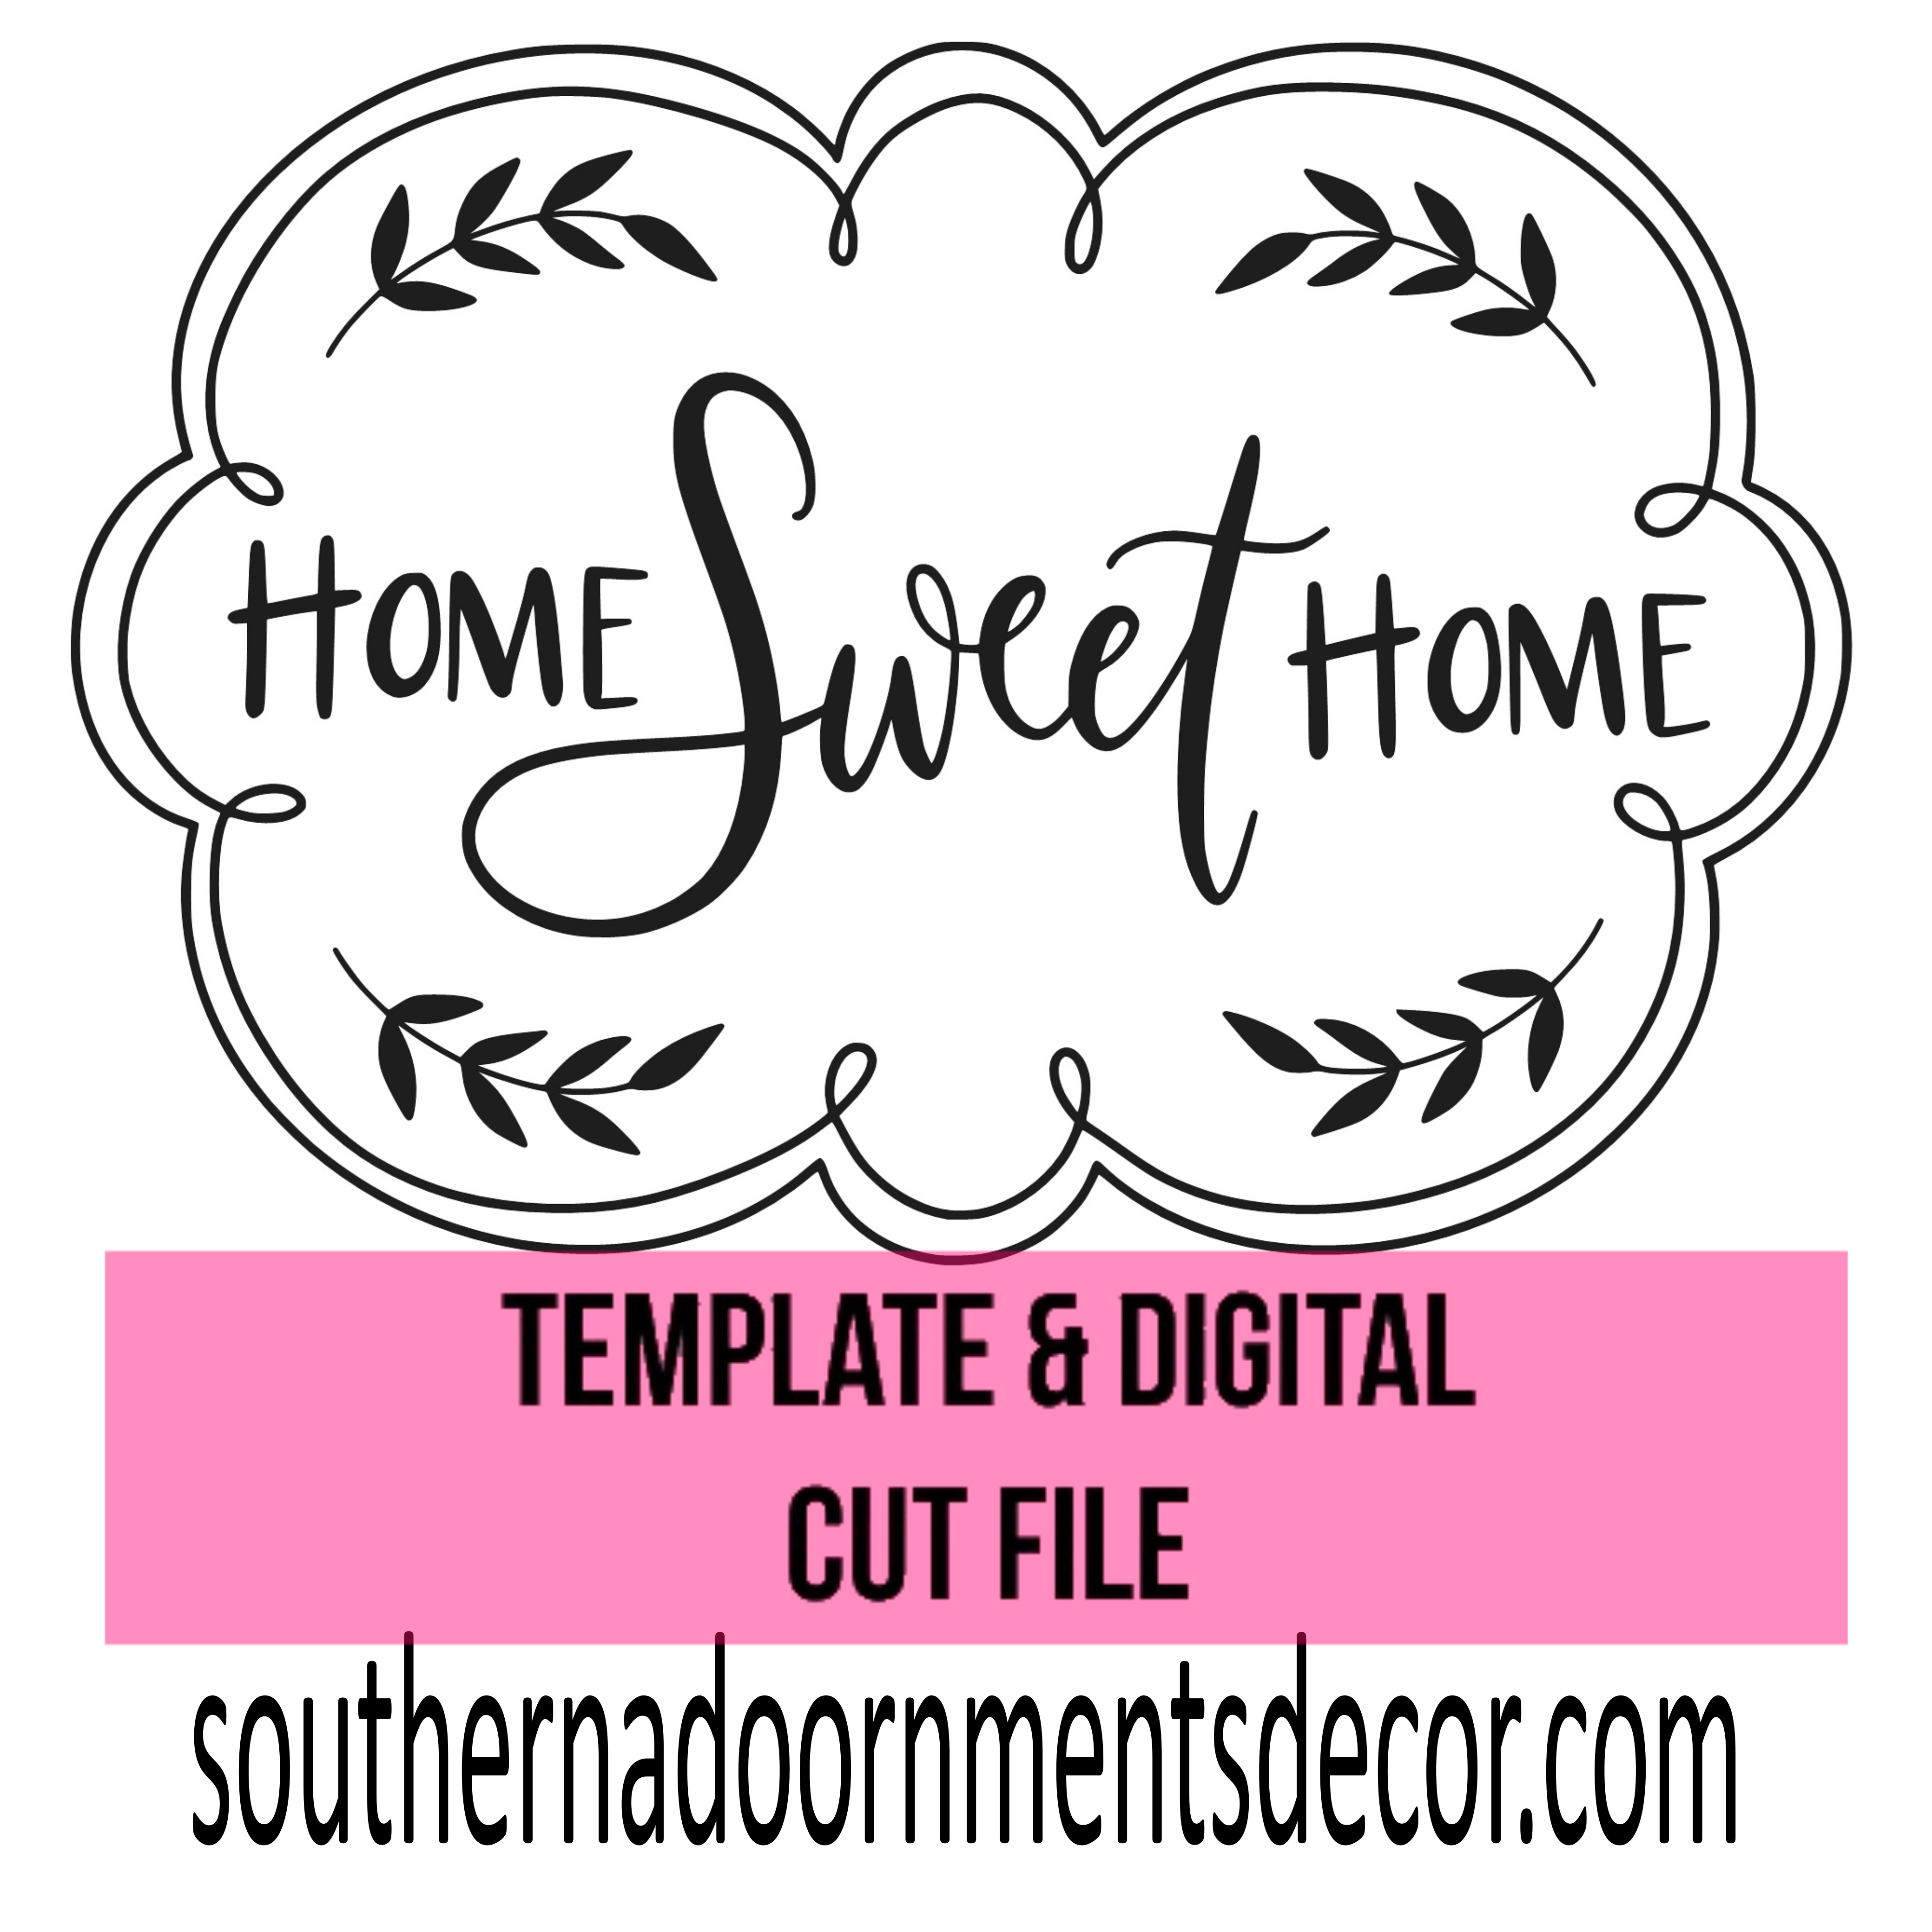 Home Sweet Home Sign Template & Digital Cut File